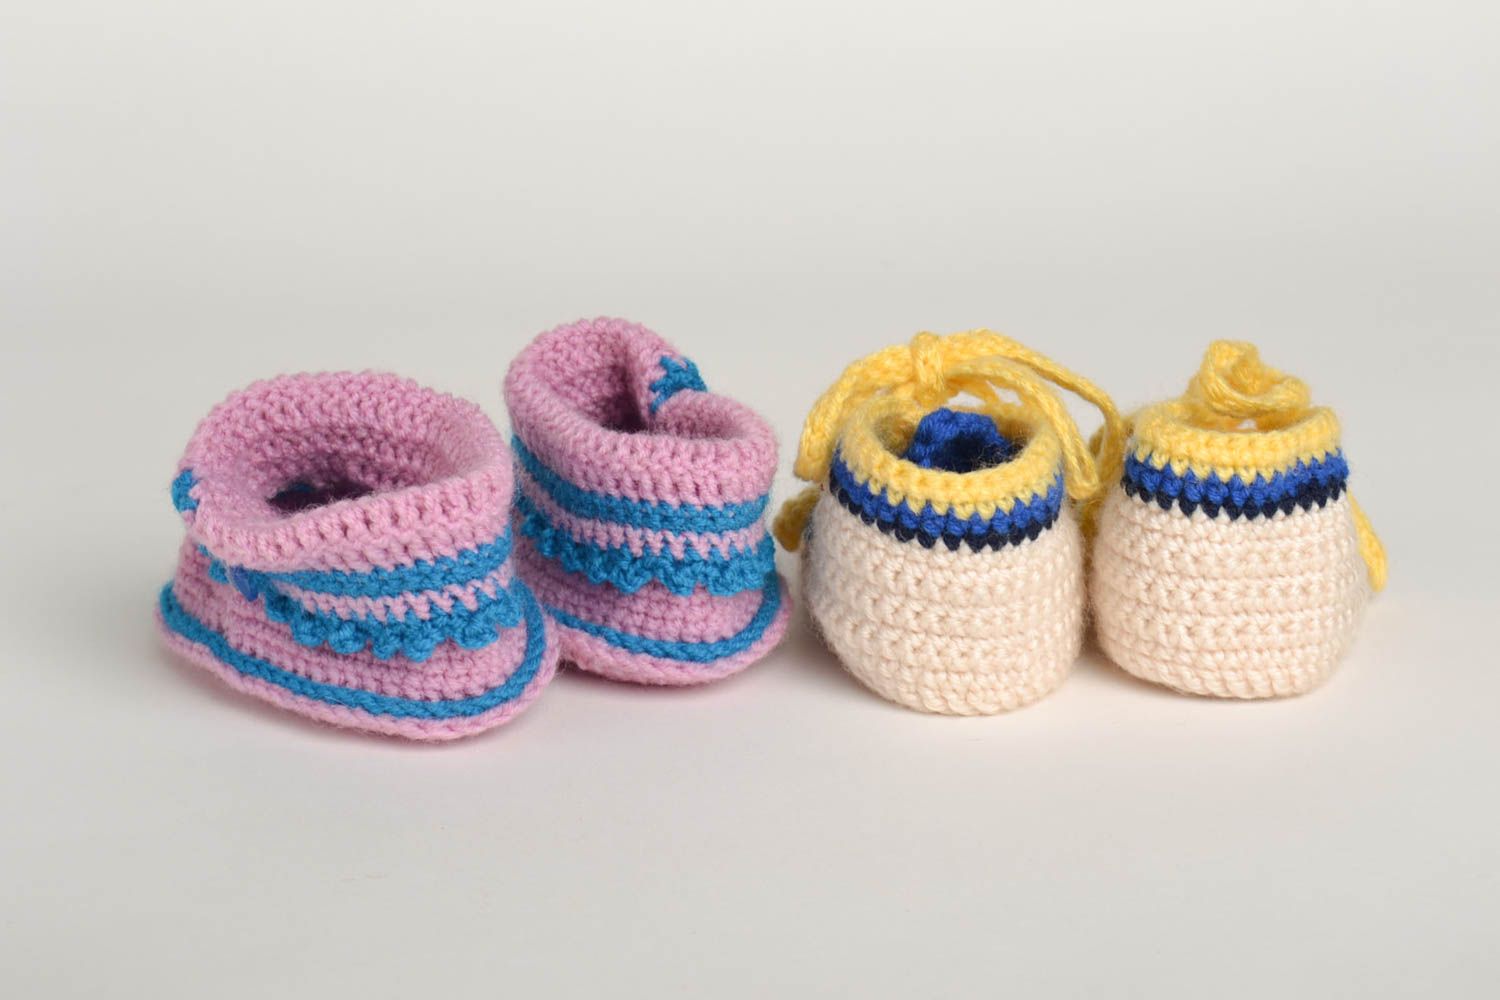 Unusual handmade baby booties design crochet ideas fashion kids warm booties photo 3